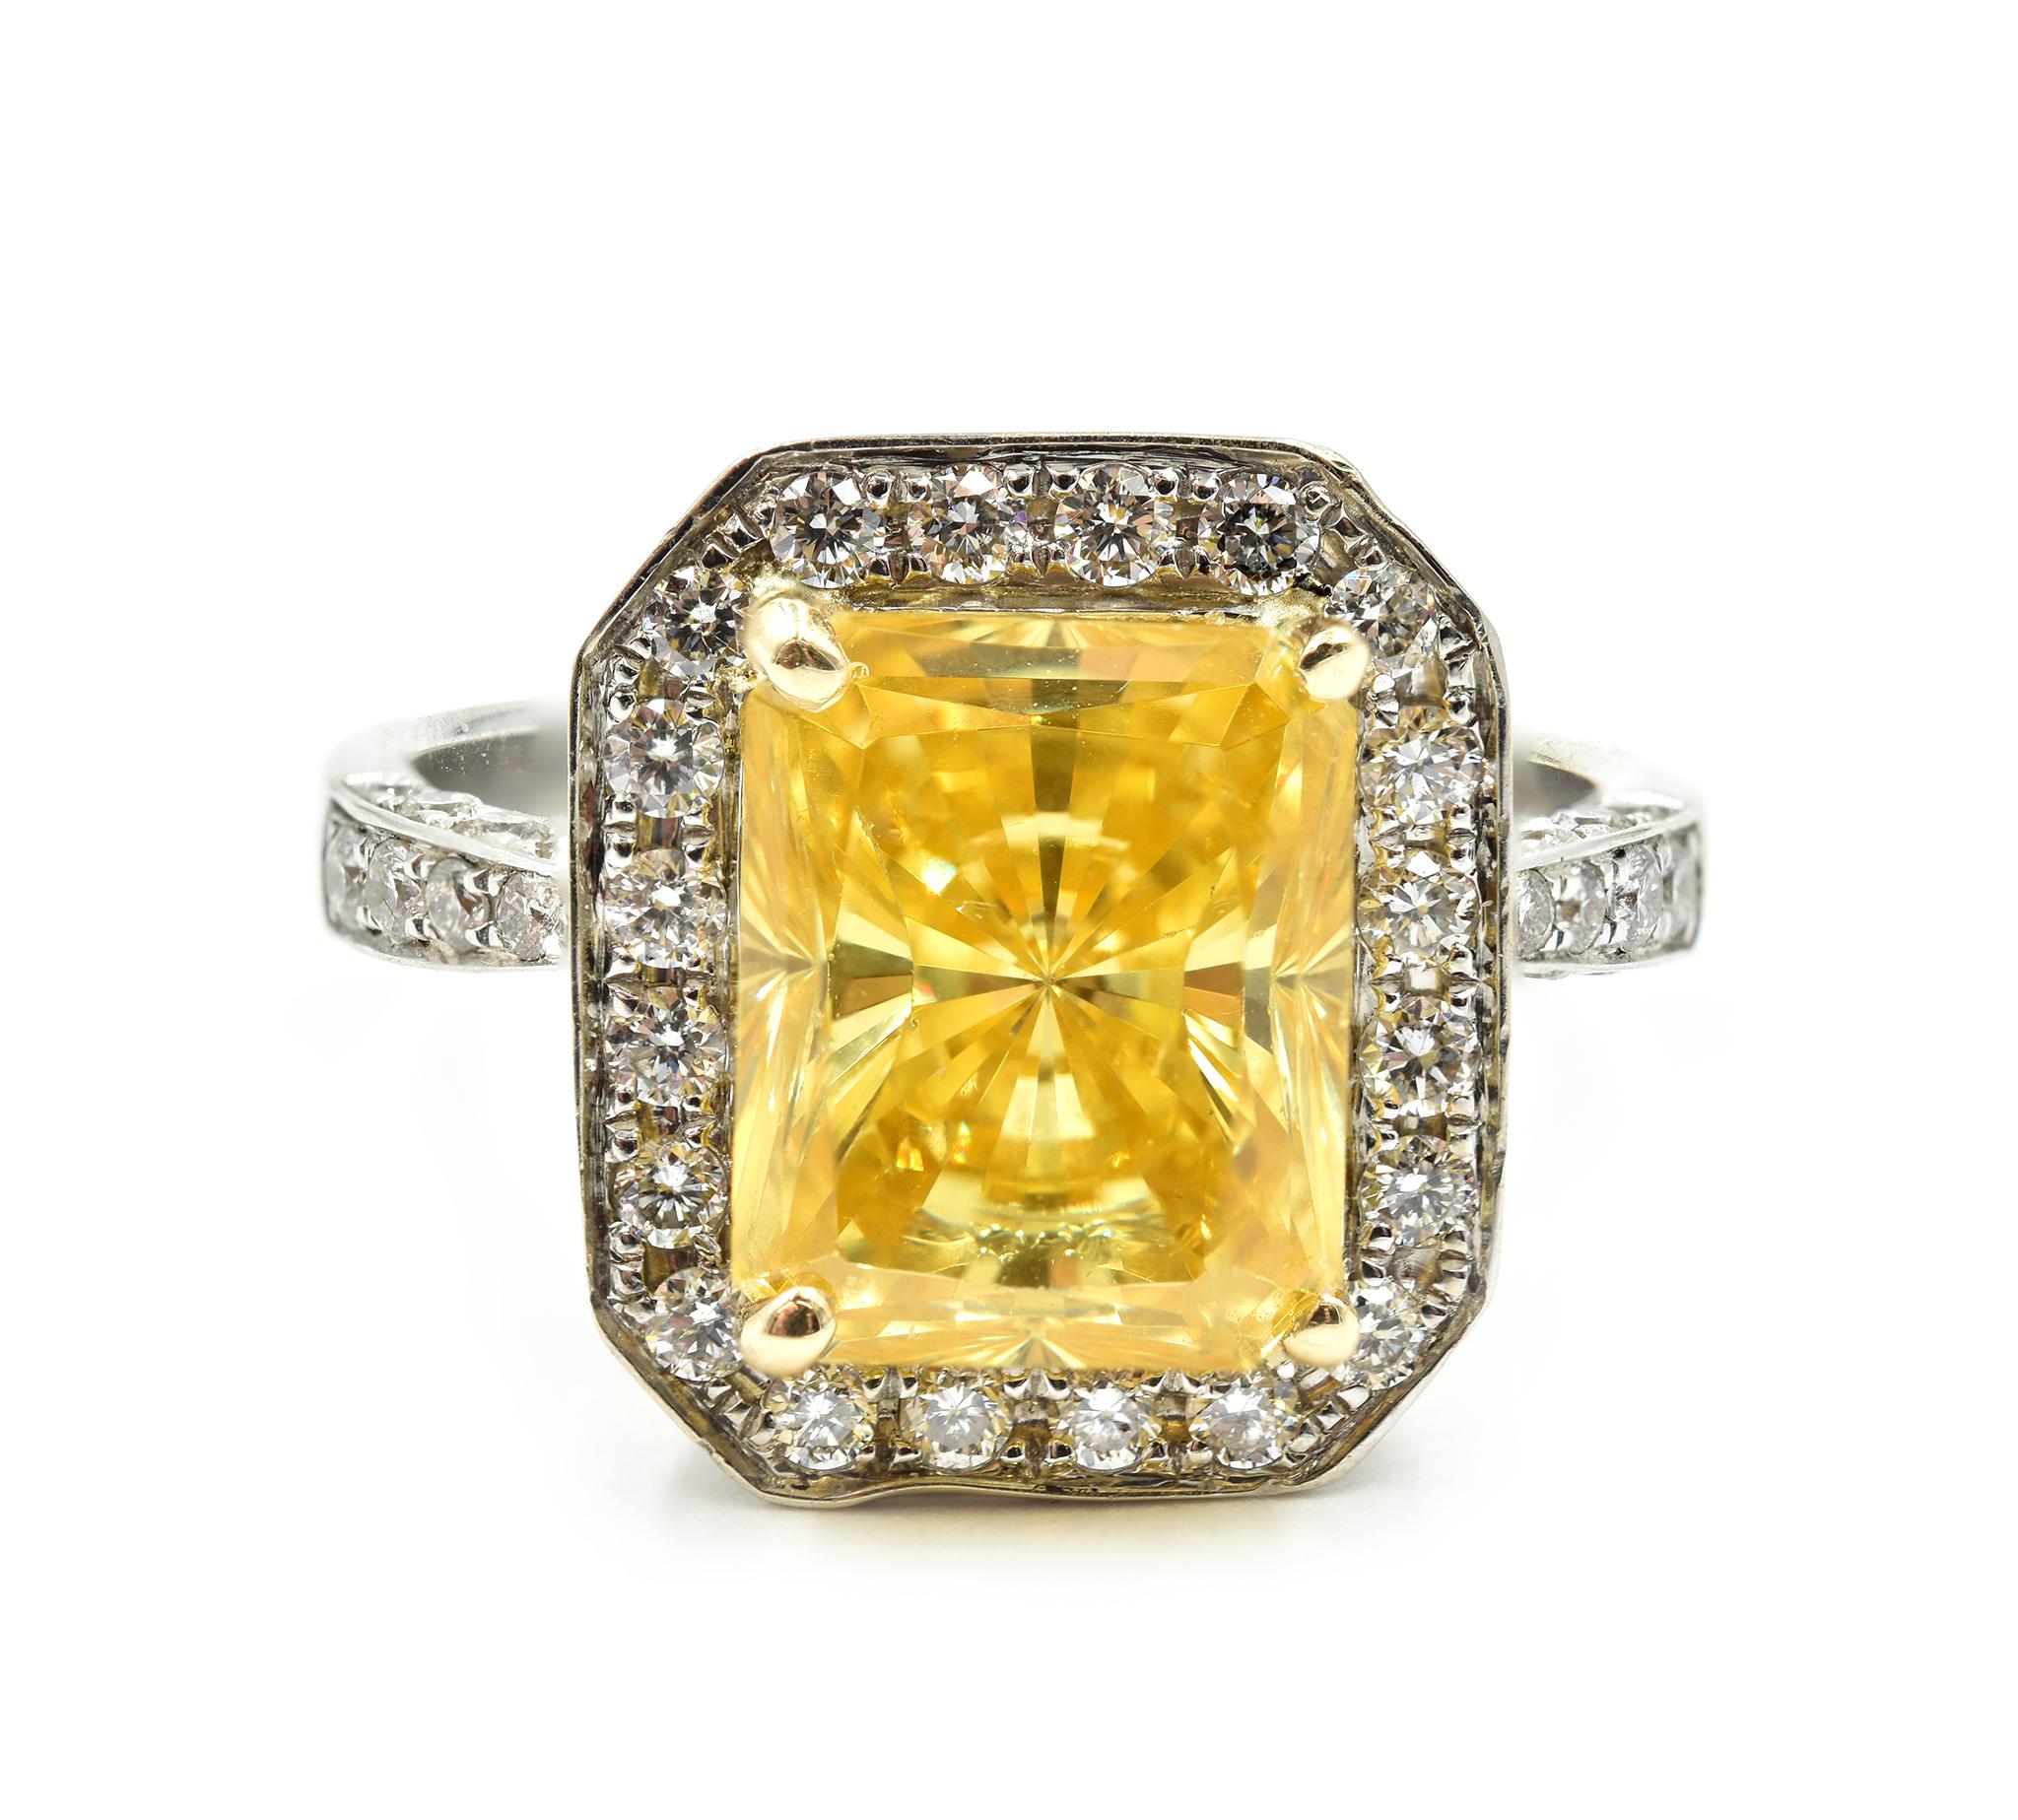 Radiant Cut 6.57 Carat Simulated Yellow Center Diamond 18 Karat White Gold Diamond Ring